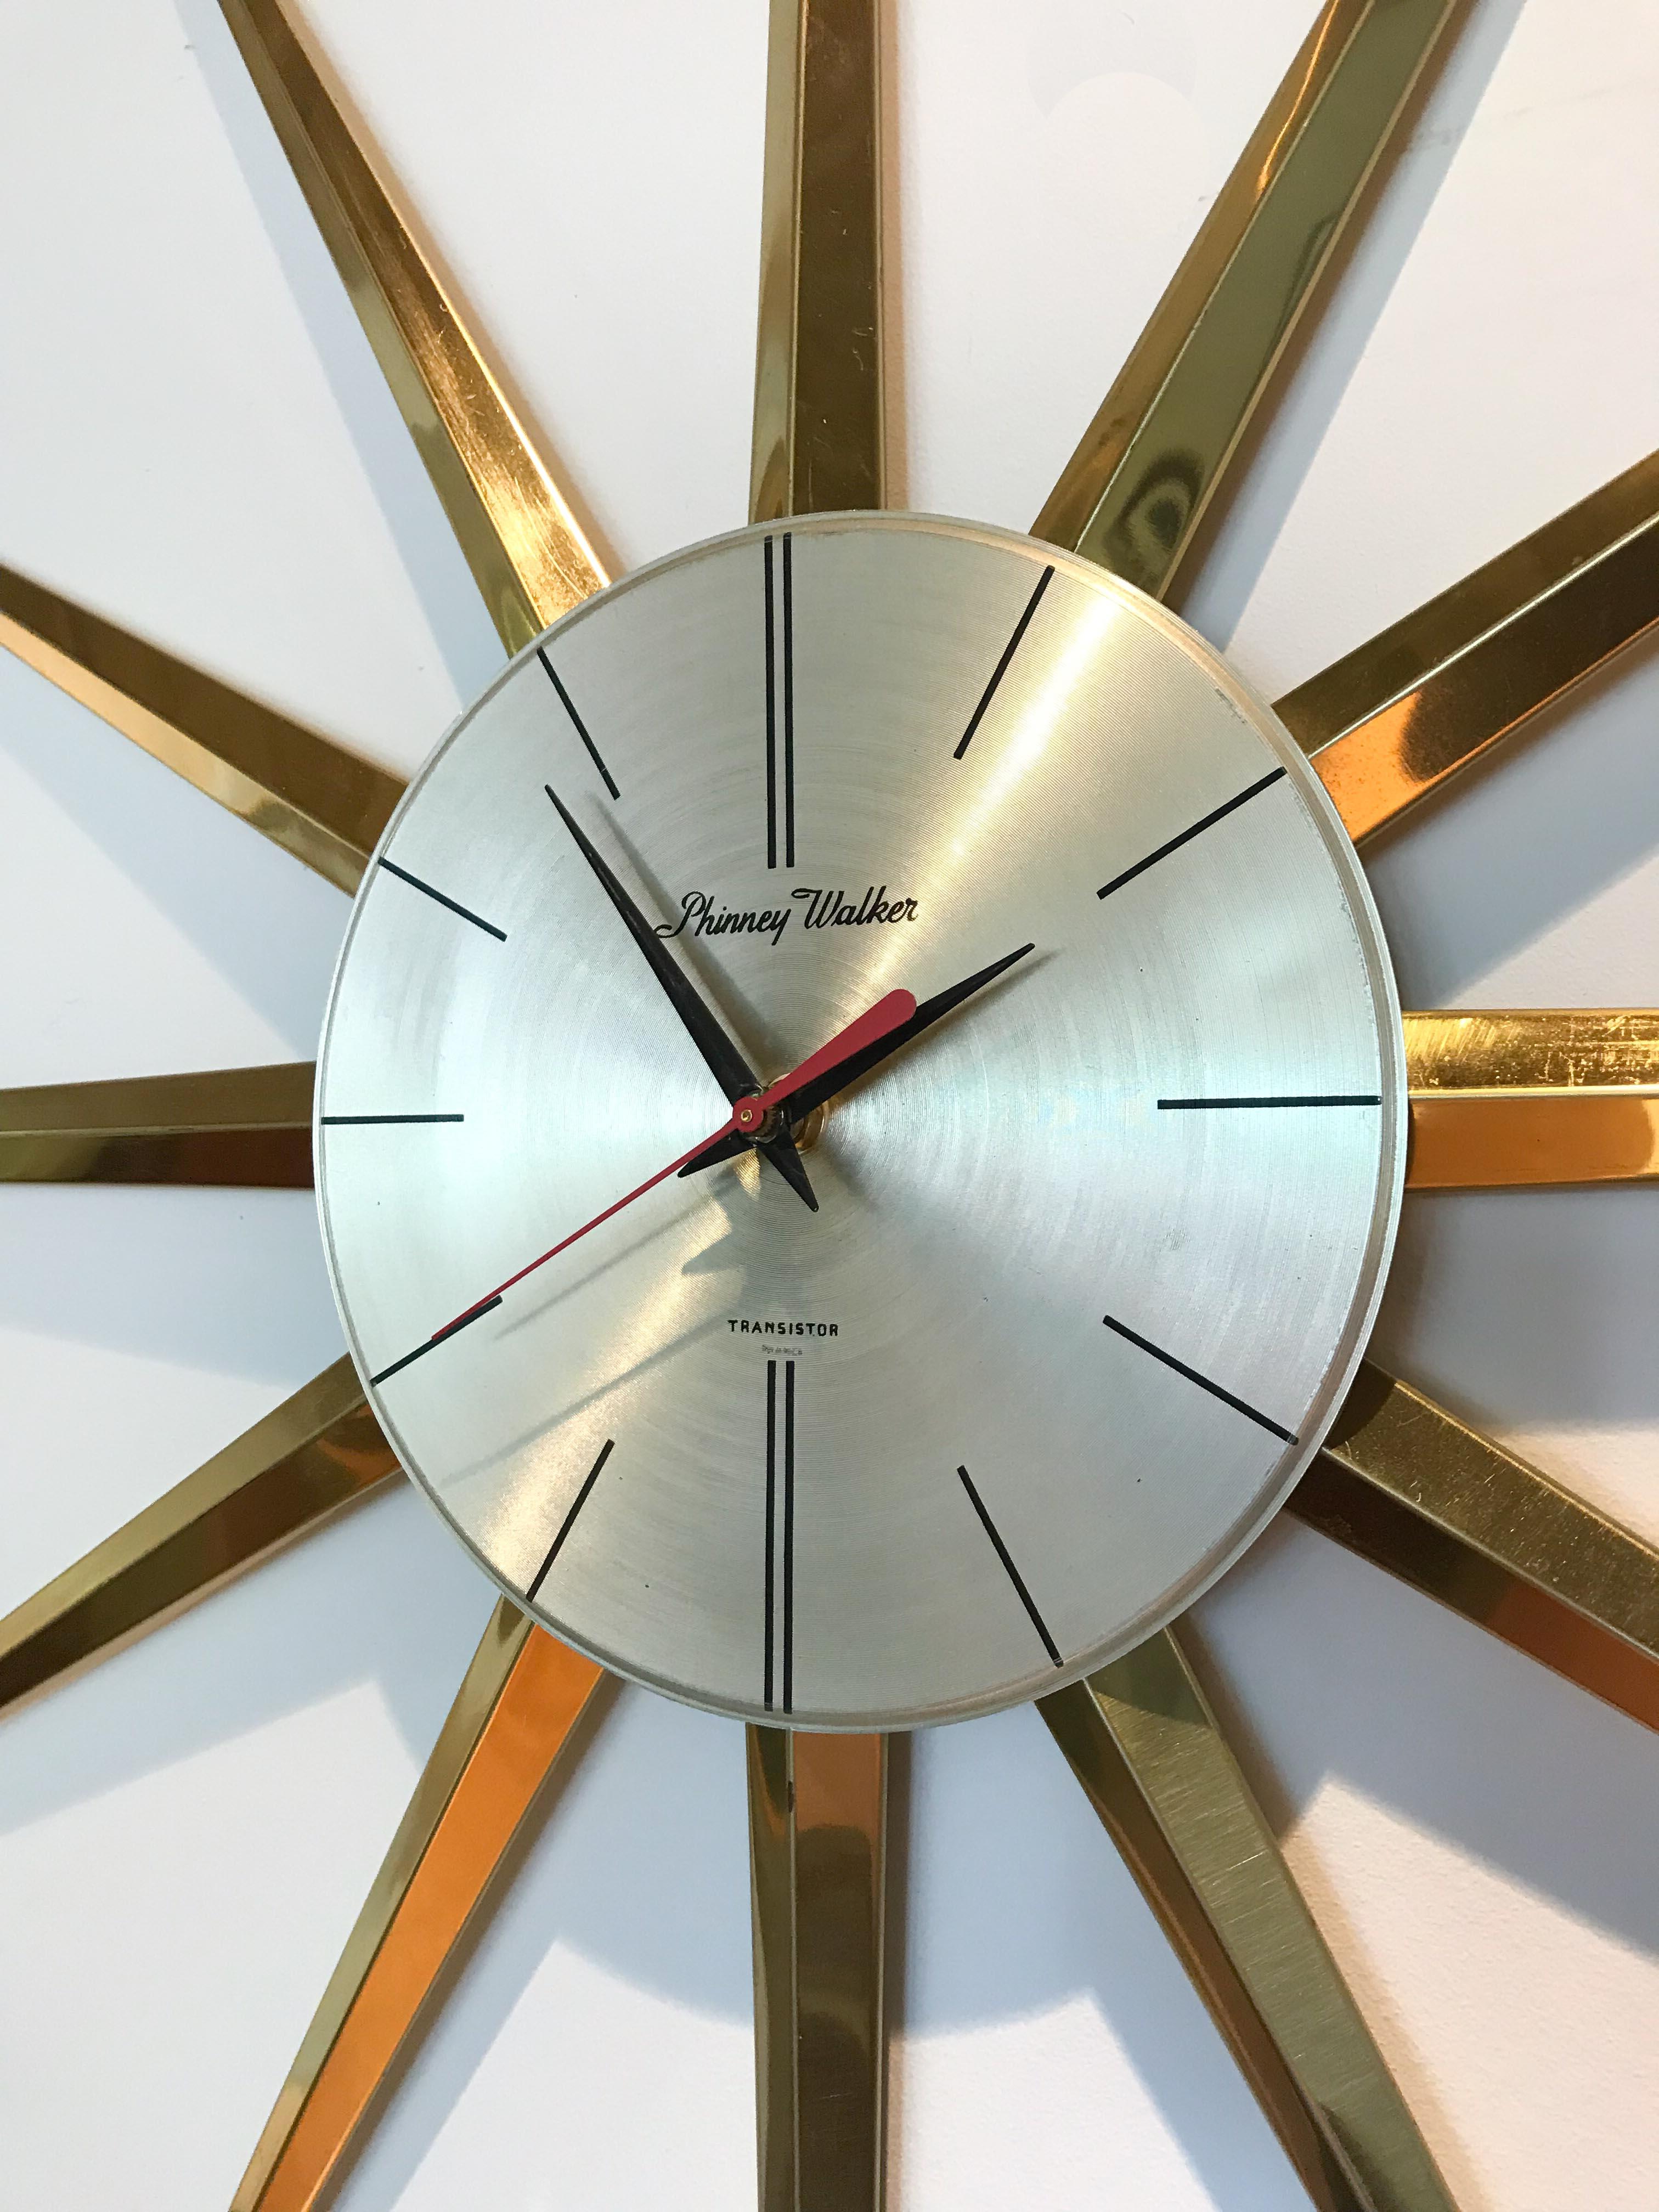 Phinney Walker Starburst wall clock. Brass body with new motor.